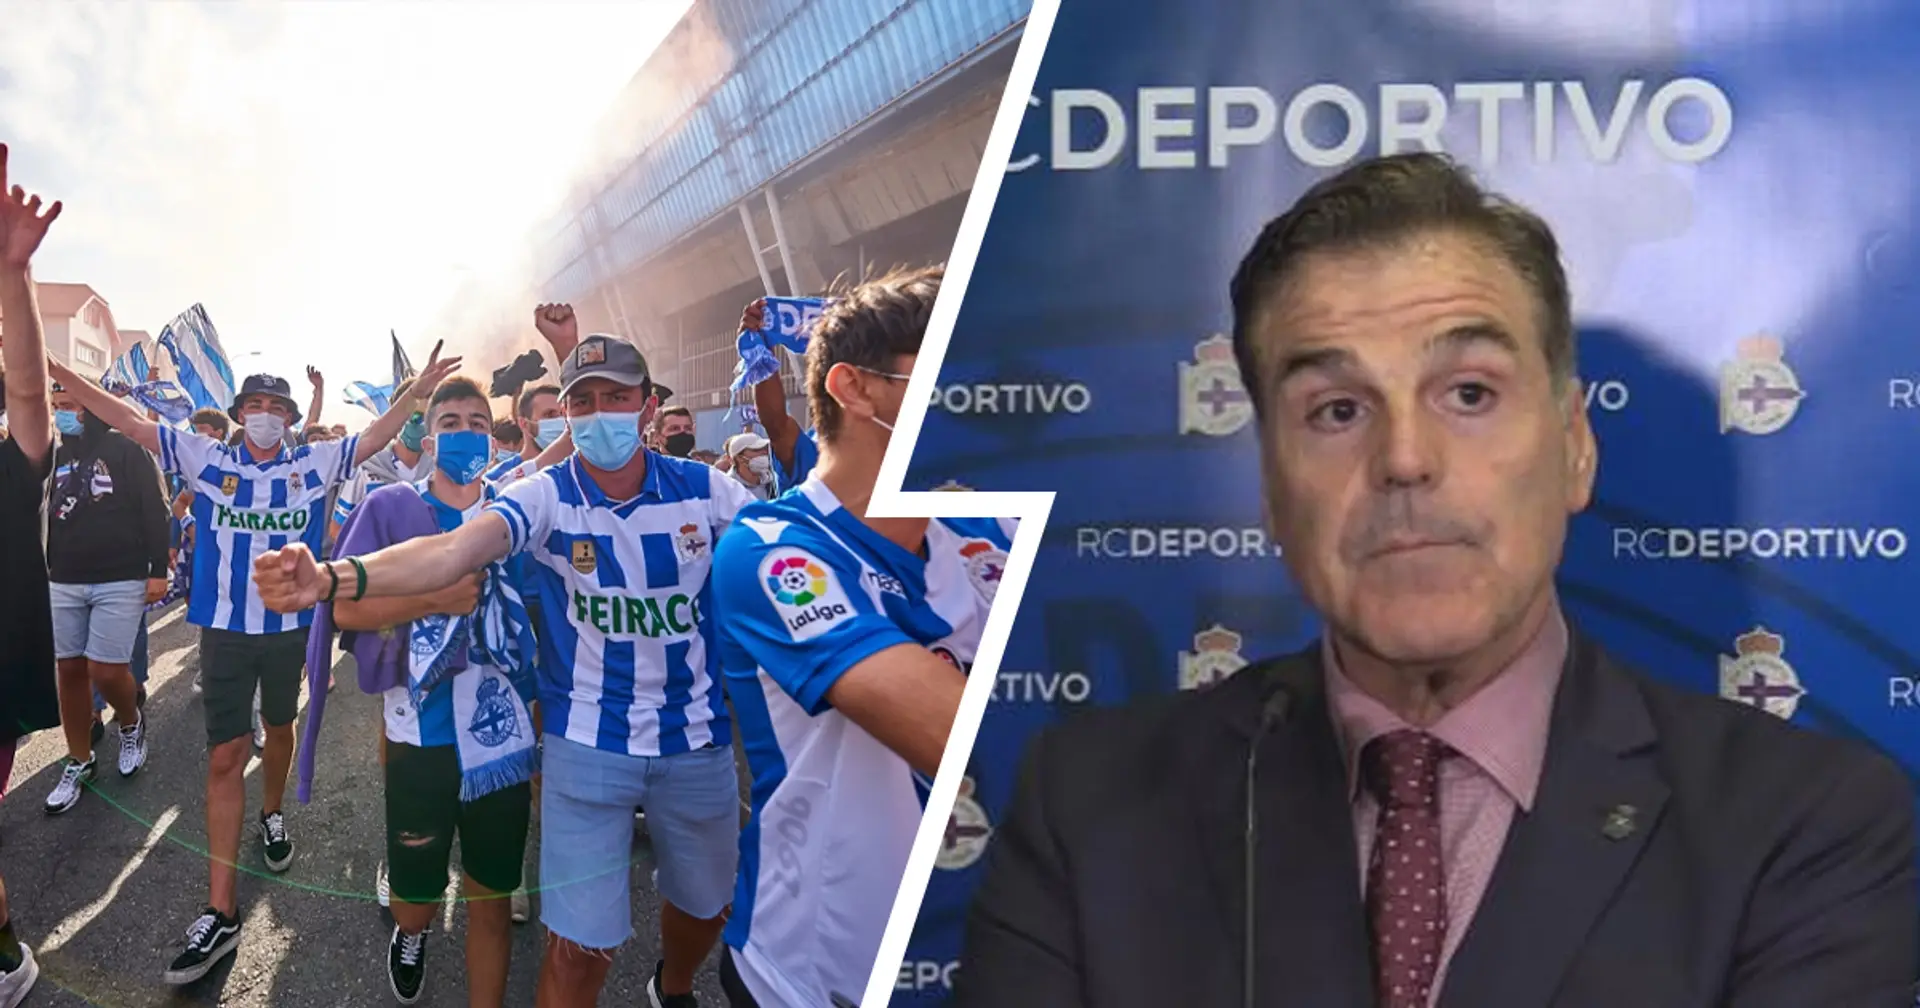 Deportivo La Coruna suffer relegation from Spanish Segunda - but club president threatens legal challenge